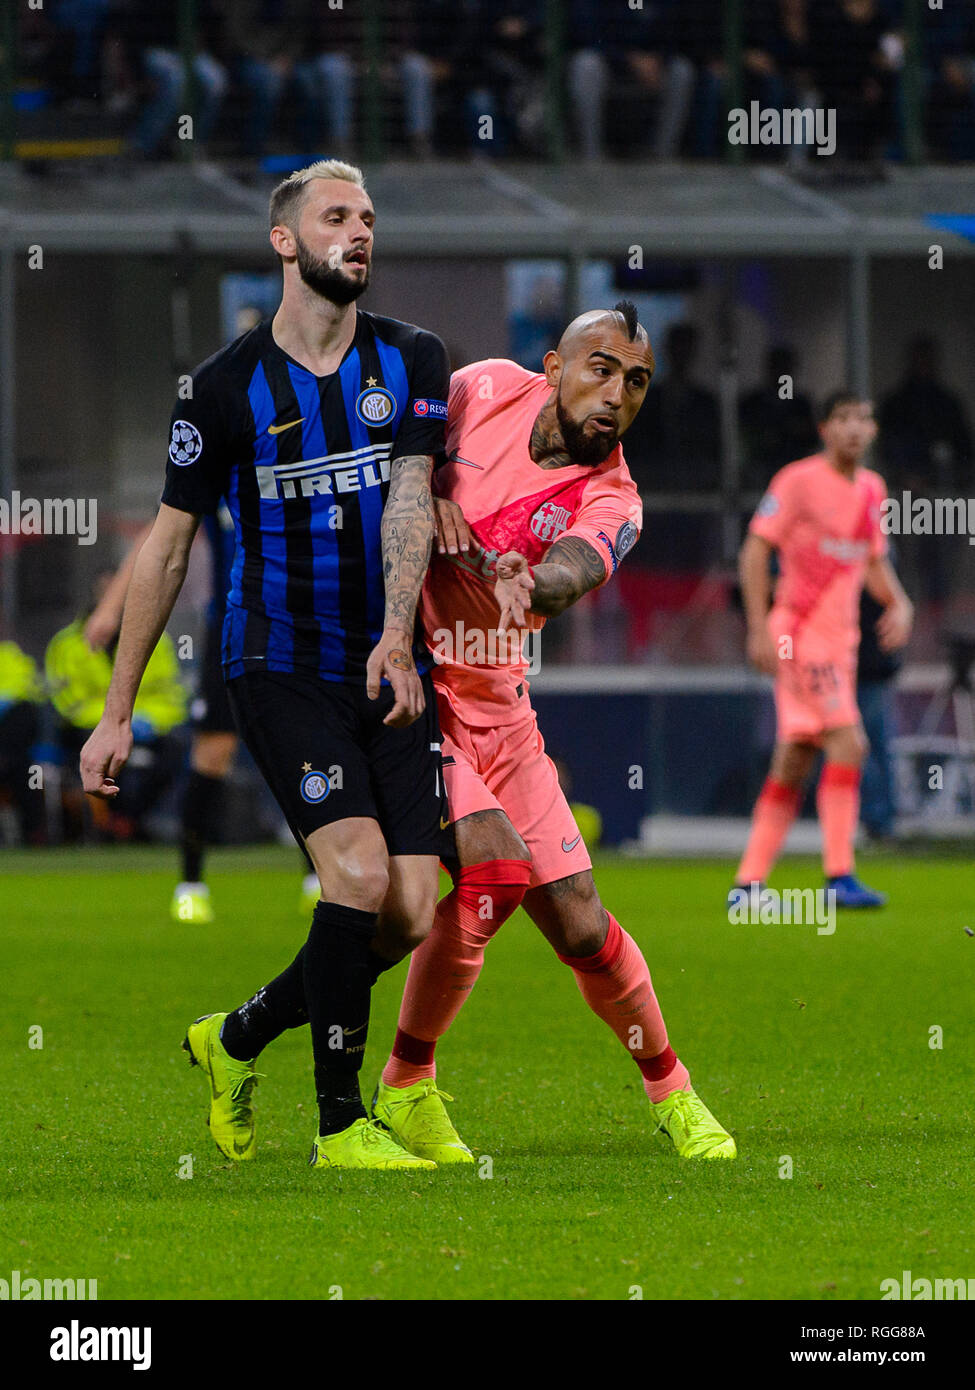 Mailand - Nov 6, 2018: Arturo Vidal vs Brozovic. FC Internazionale - FC Barcelona. UEFA Champions League. Spieltag 4. Giuseppe Meazza (San Siro) Stadion Stockfoto